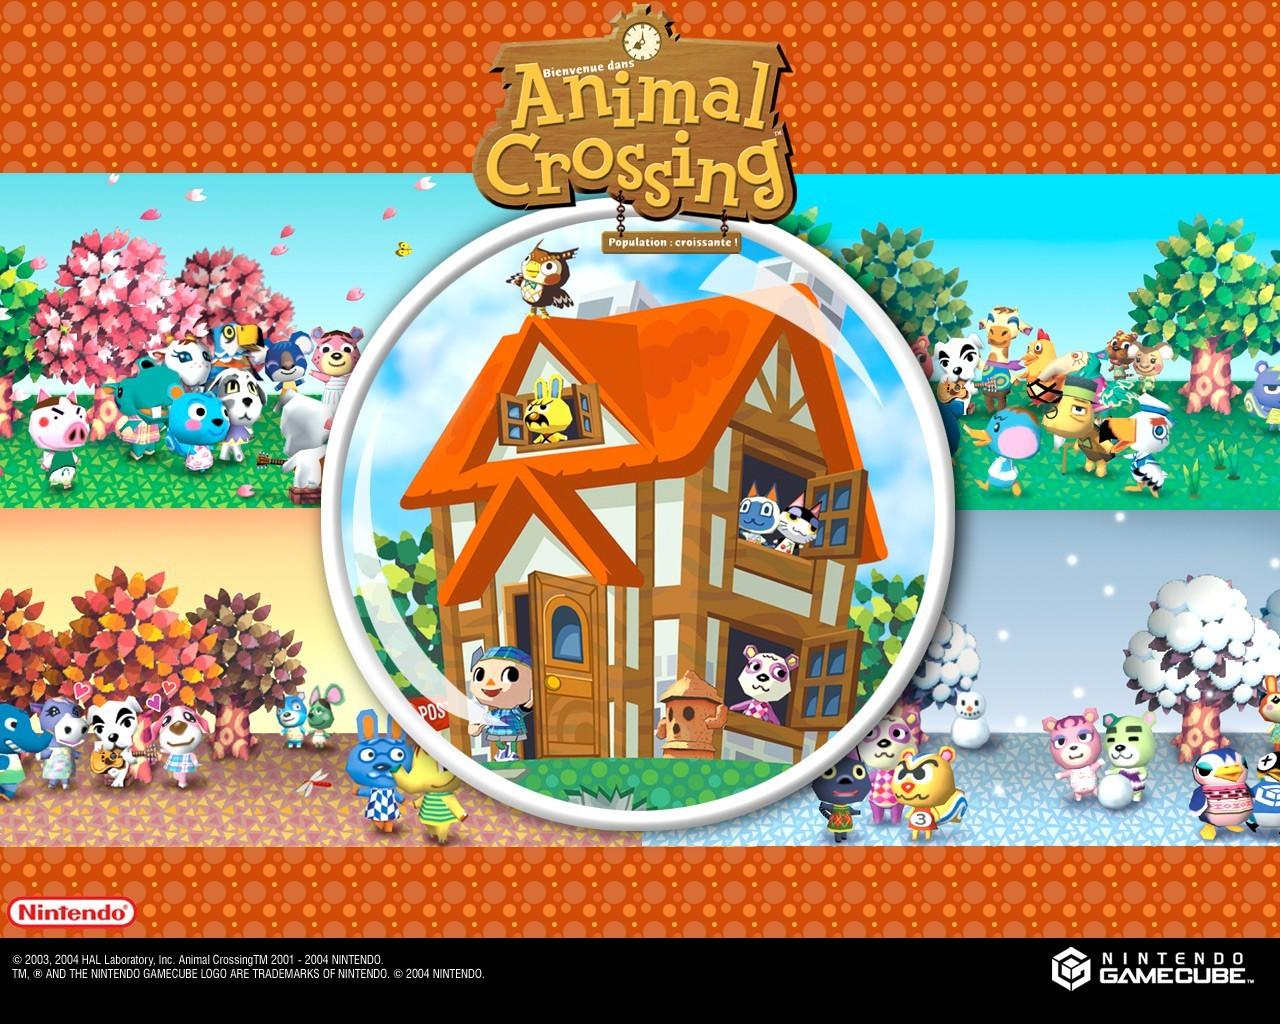 Nintendo gamecube animal crossing wallpaper